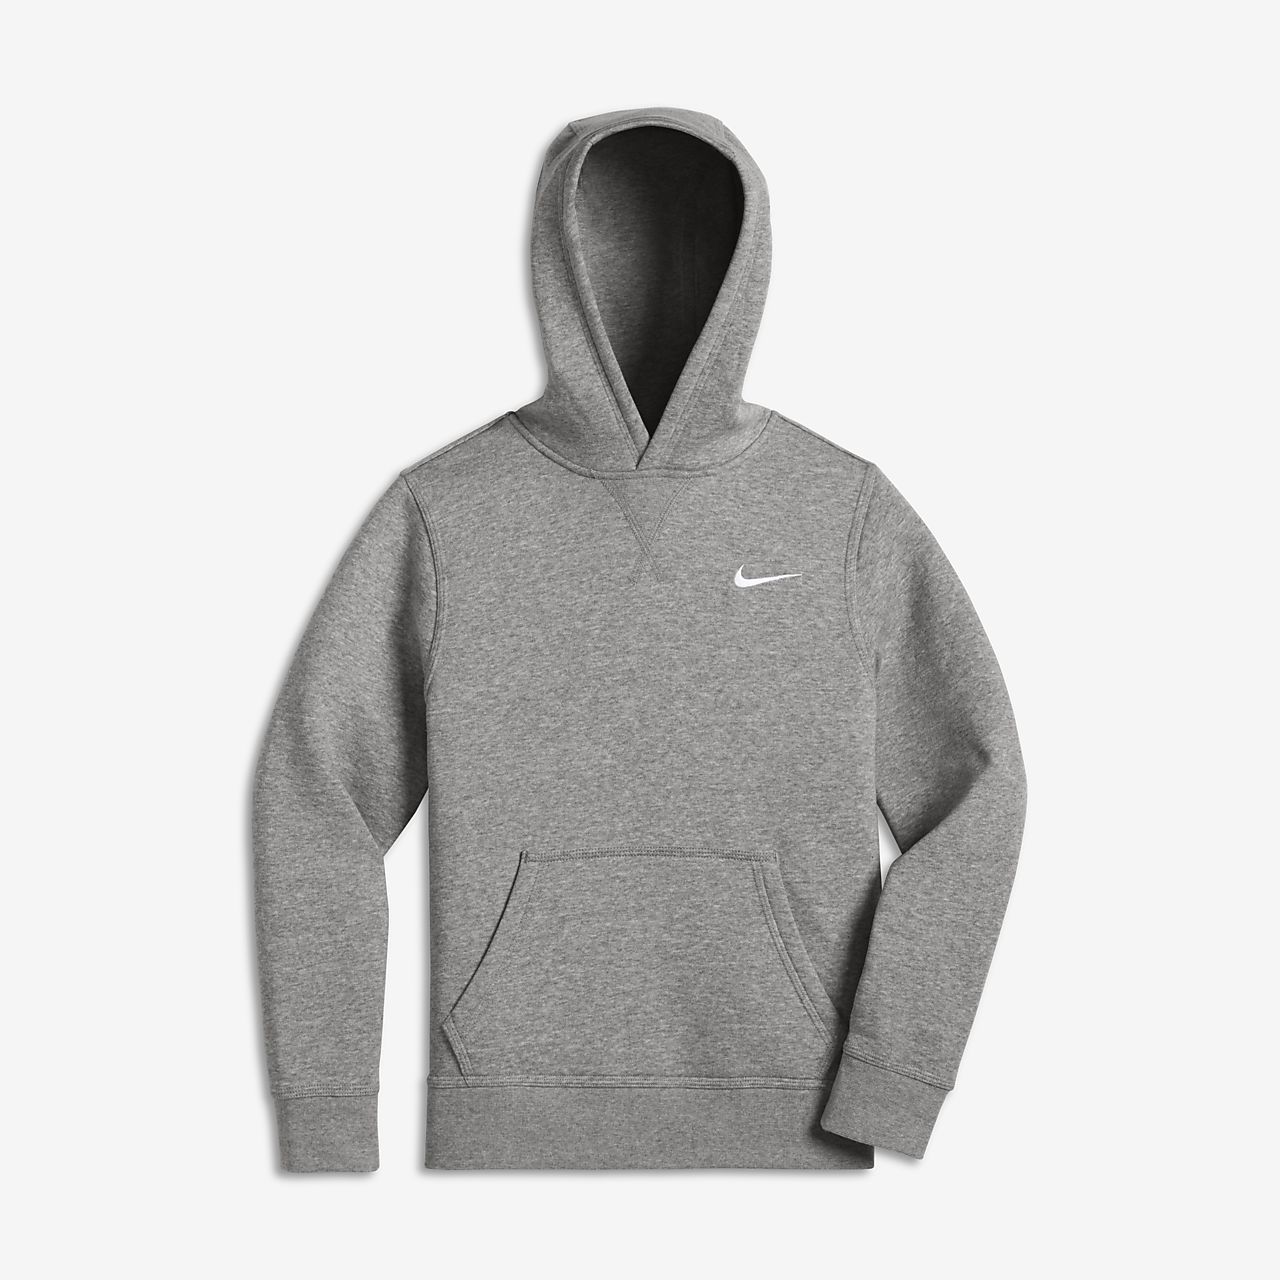 nike basic hoodie Online Shopping for 